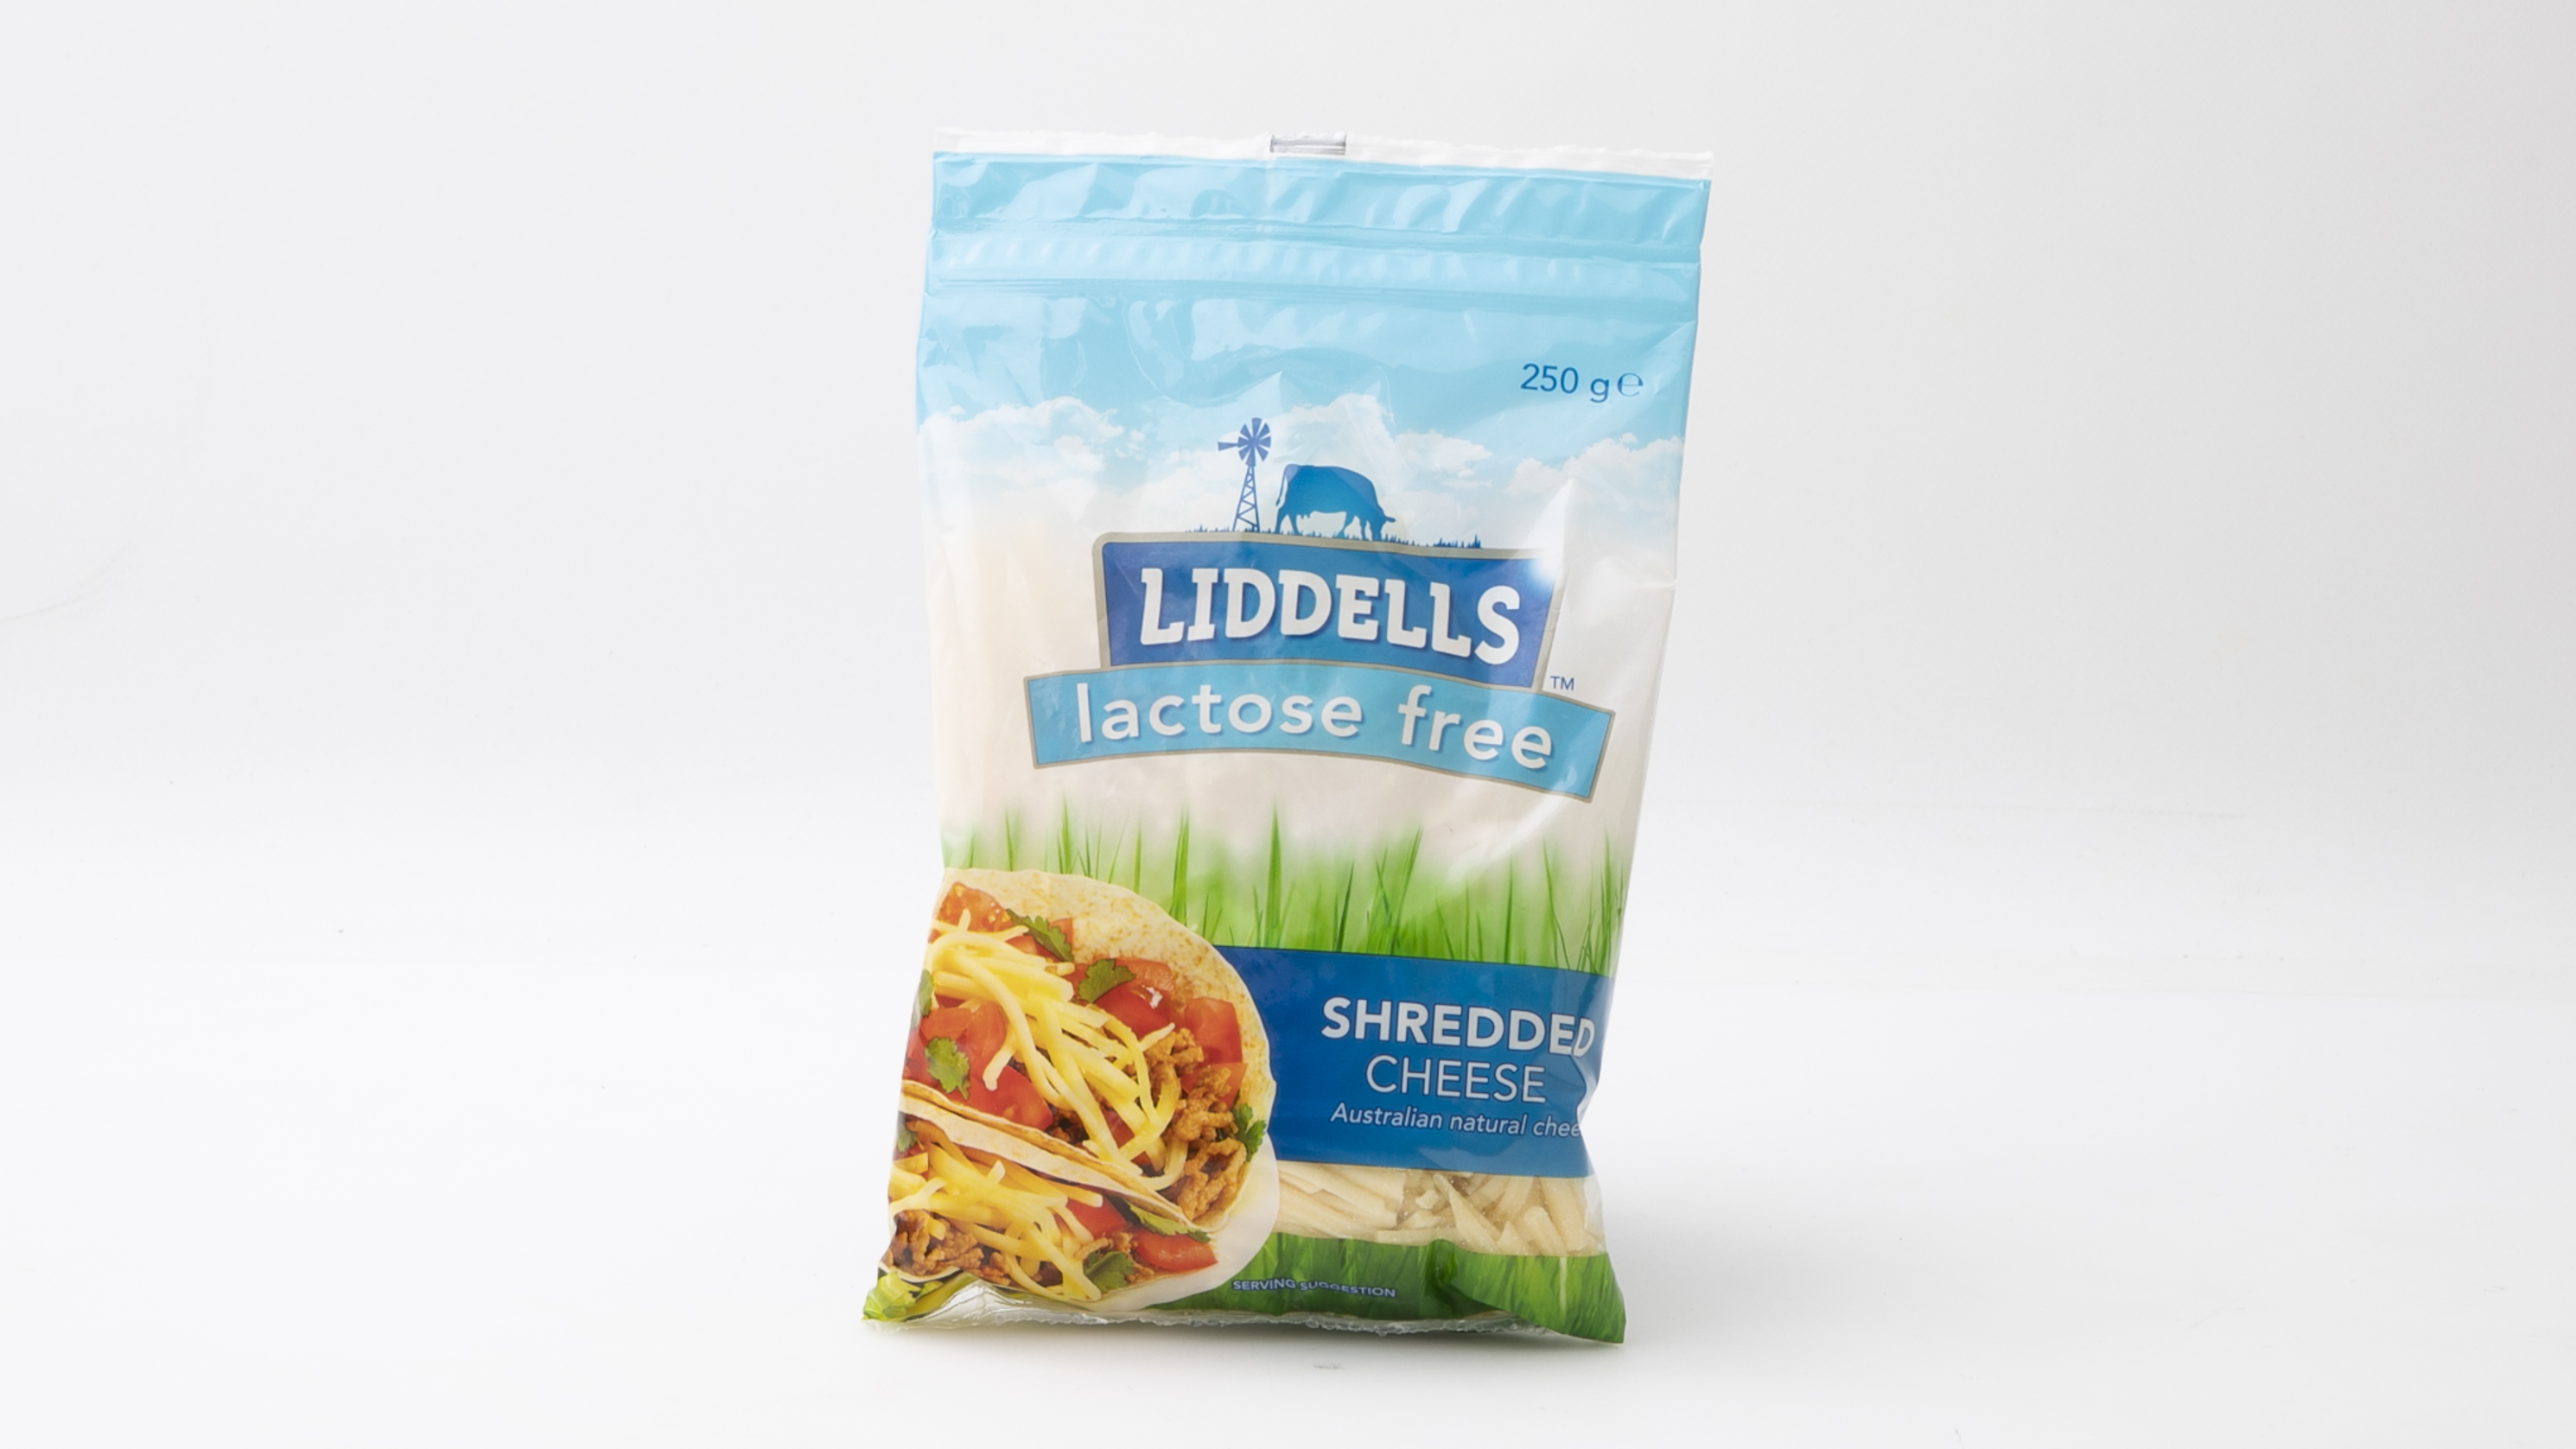 Liddells Lactose Free Shredded Cheese carousel image